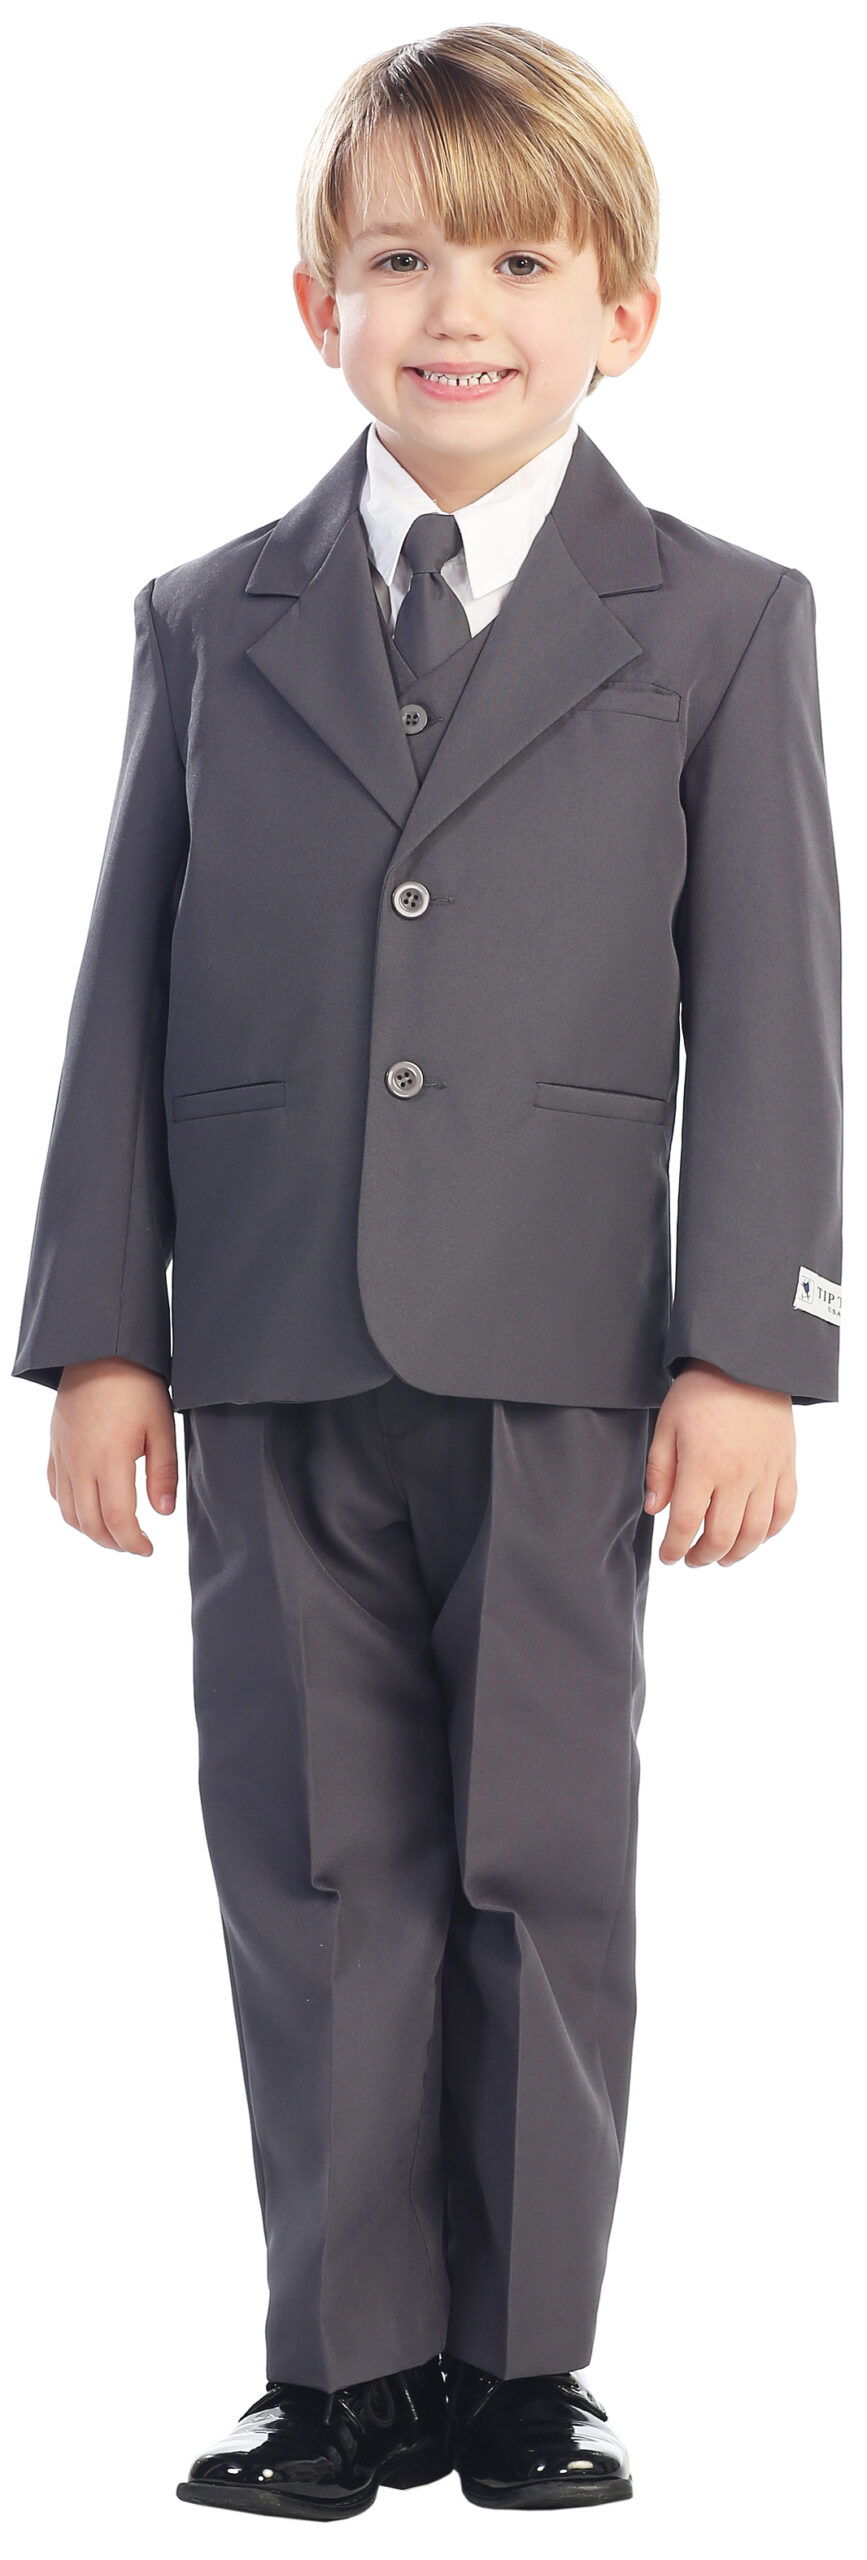 Avery Hill 5-Piece Boy's 2-Button Dress Suit Full-Back Vest - Charcoal Grey Size 8